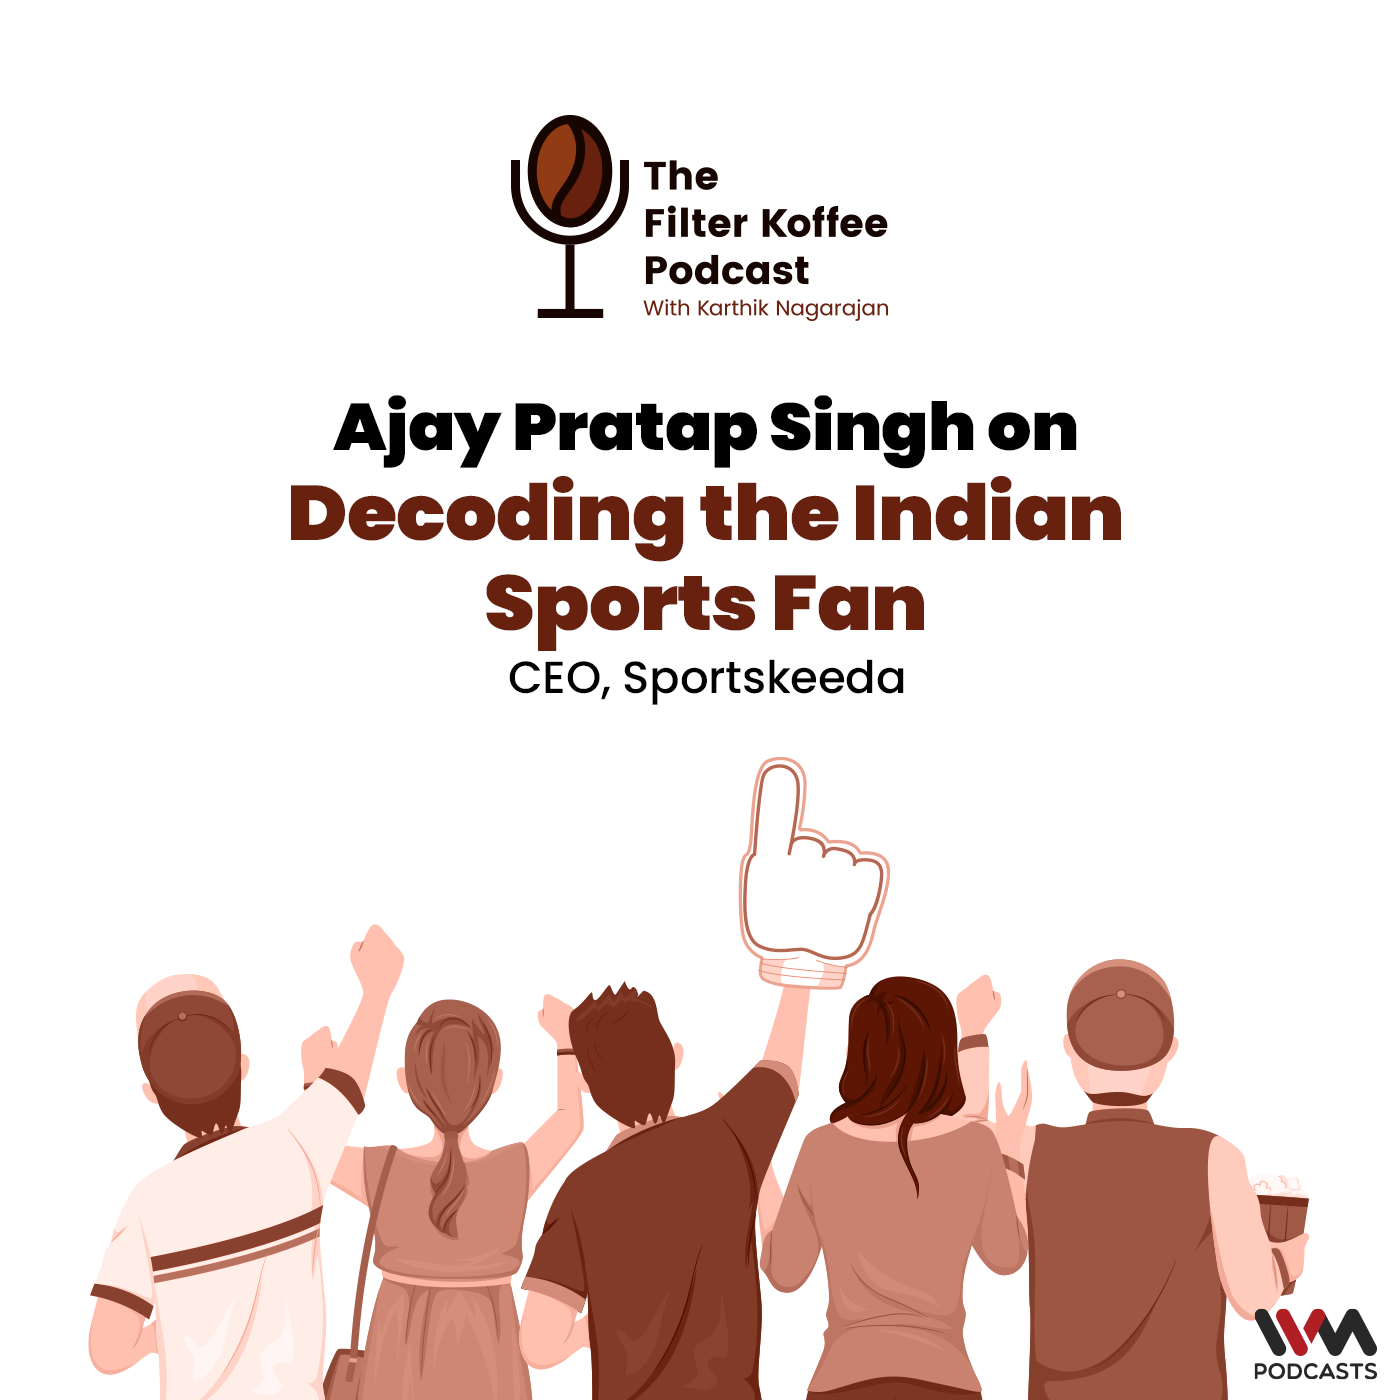 Ajay Pratap Singh on Decoding the Indian Sports Fan